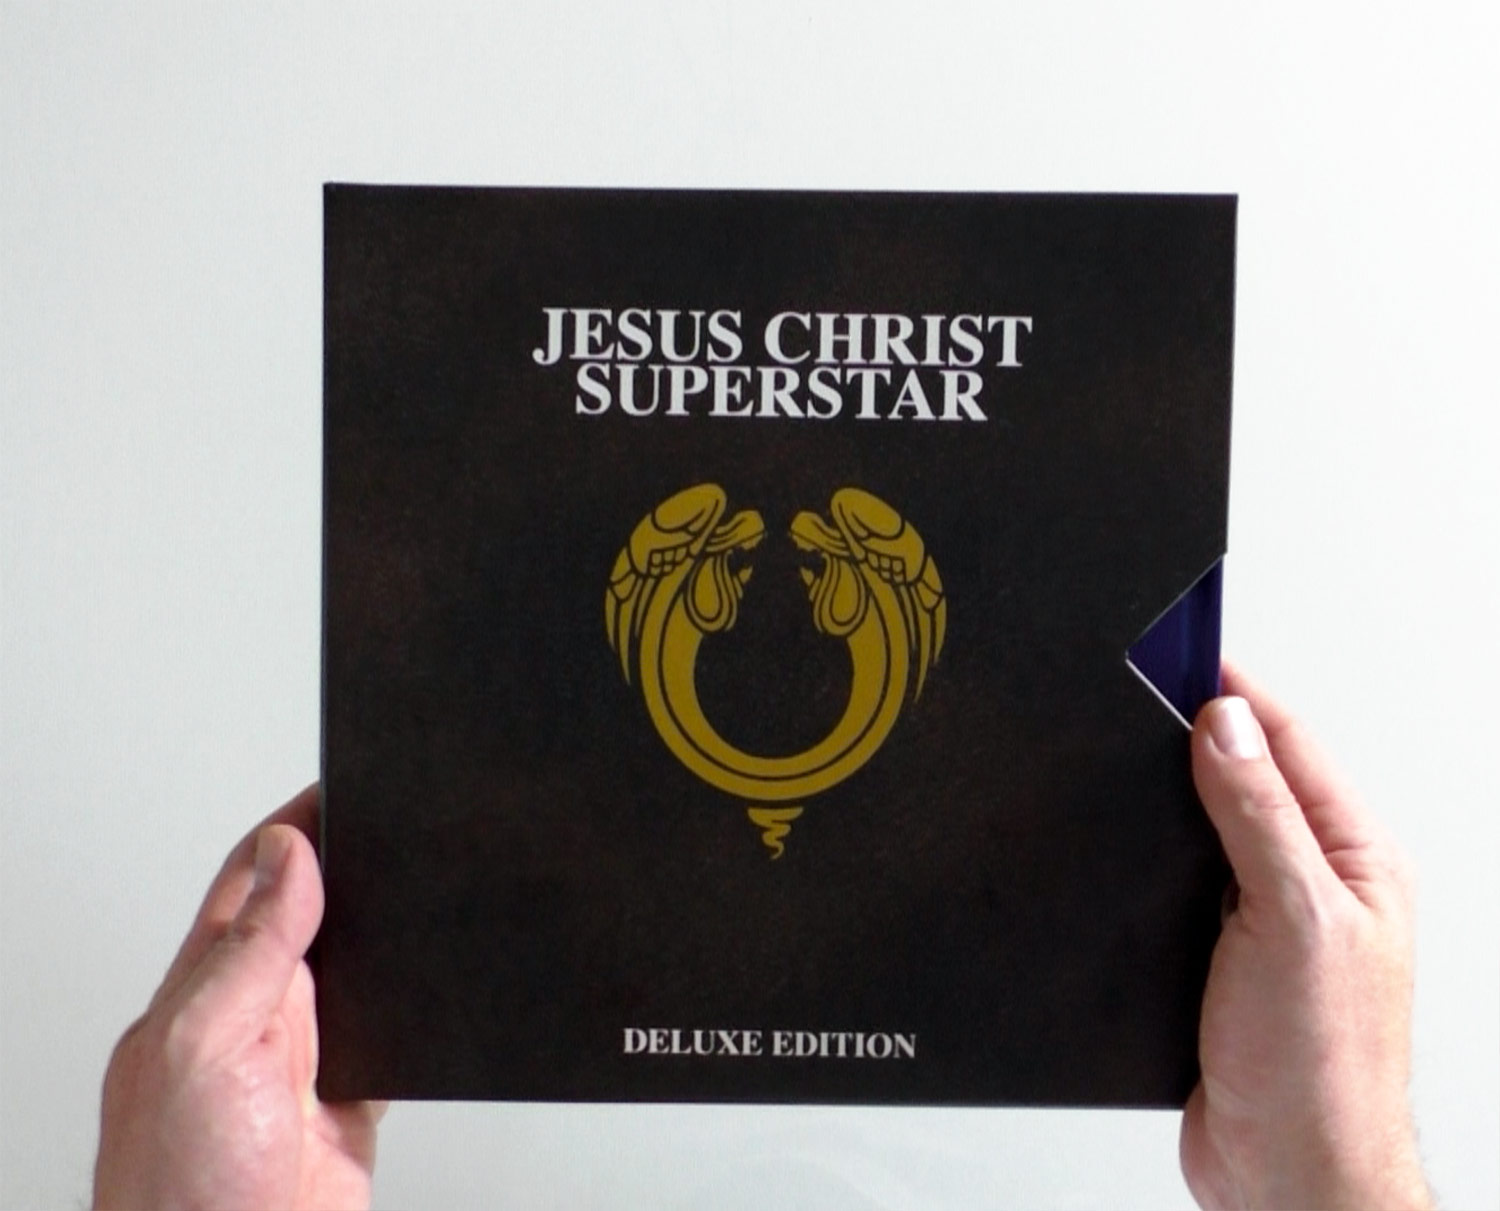 Jesus Christ Superstar deluxe edition unboxed